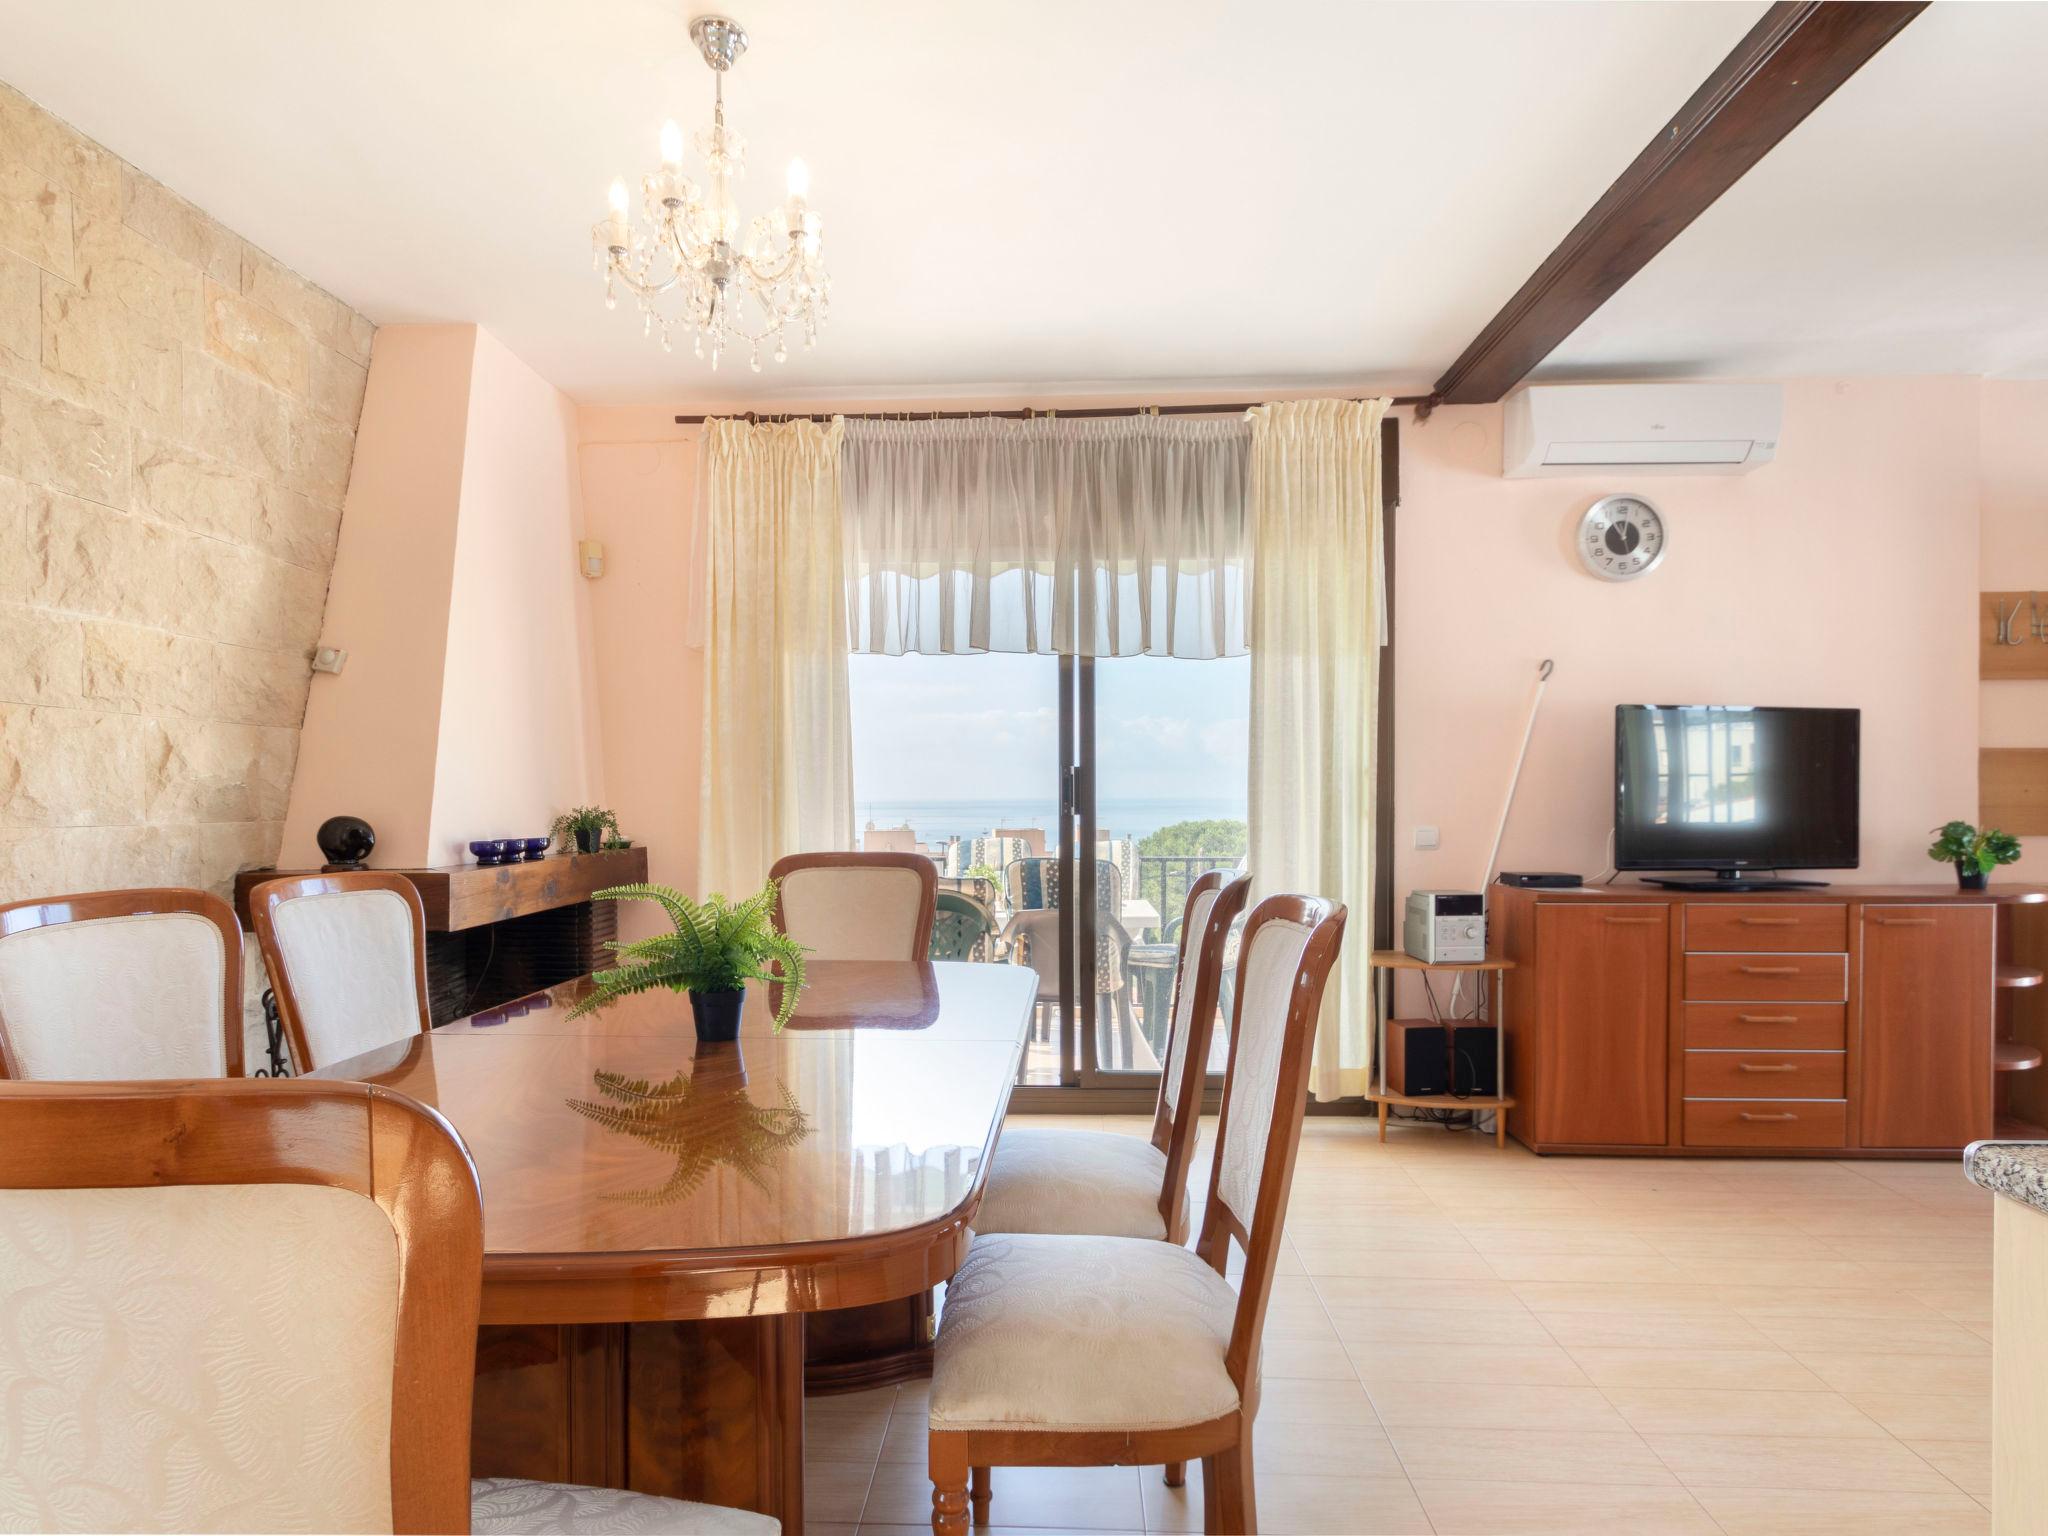 Photo 13 - Appartement de 2 chambres à Torredembarra avec terrasse et vues à la mer